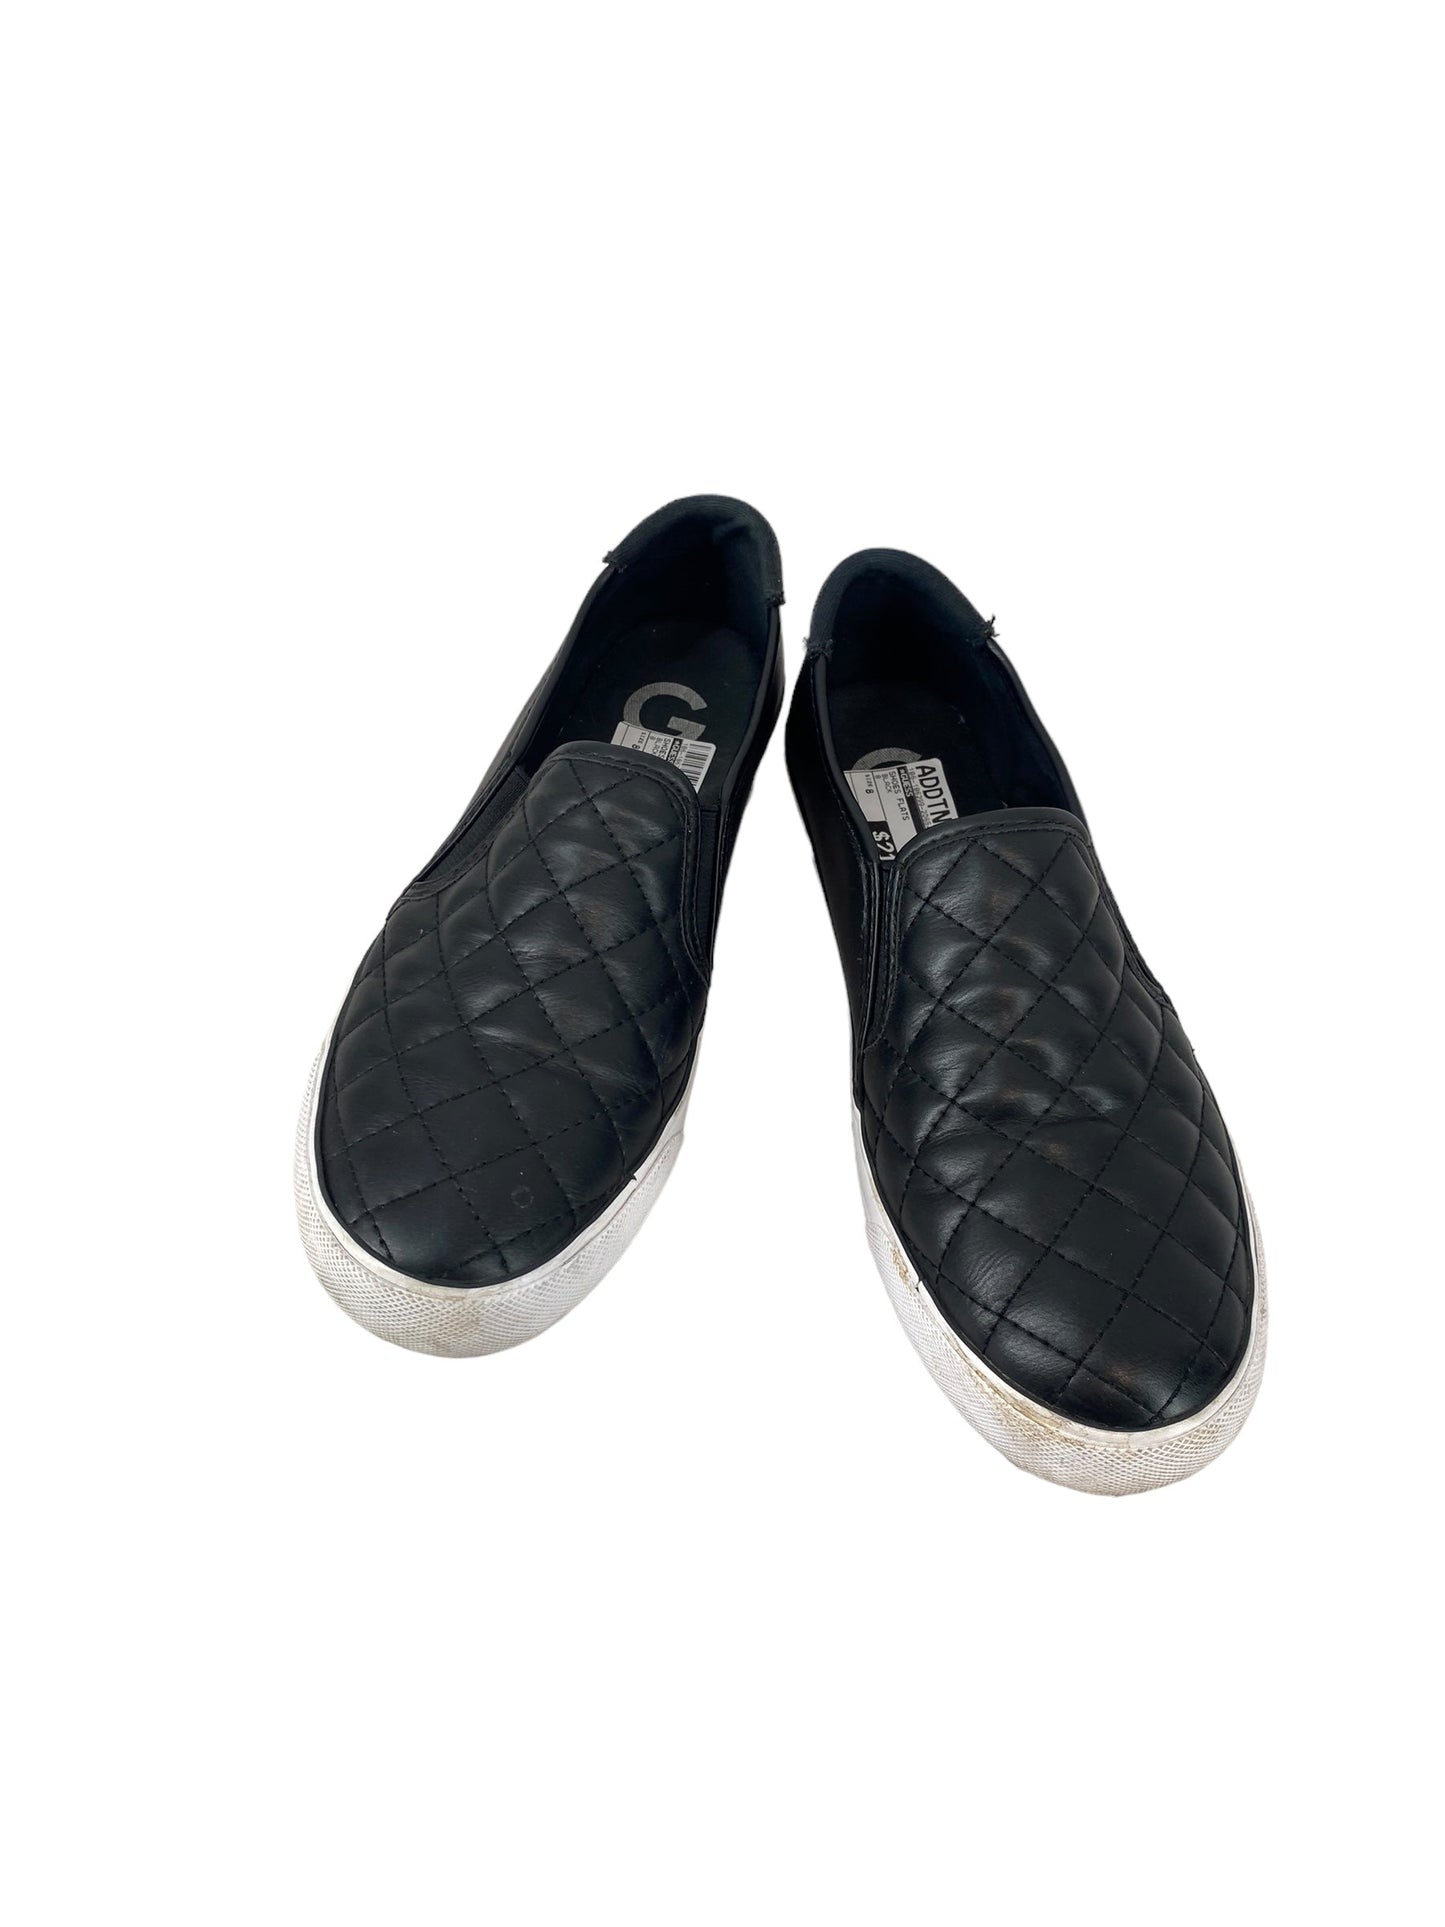 Black Shoes Flats Guess, Size 8